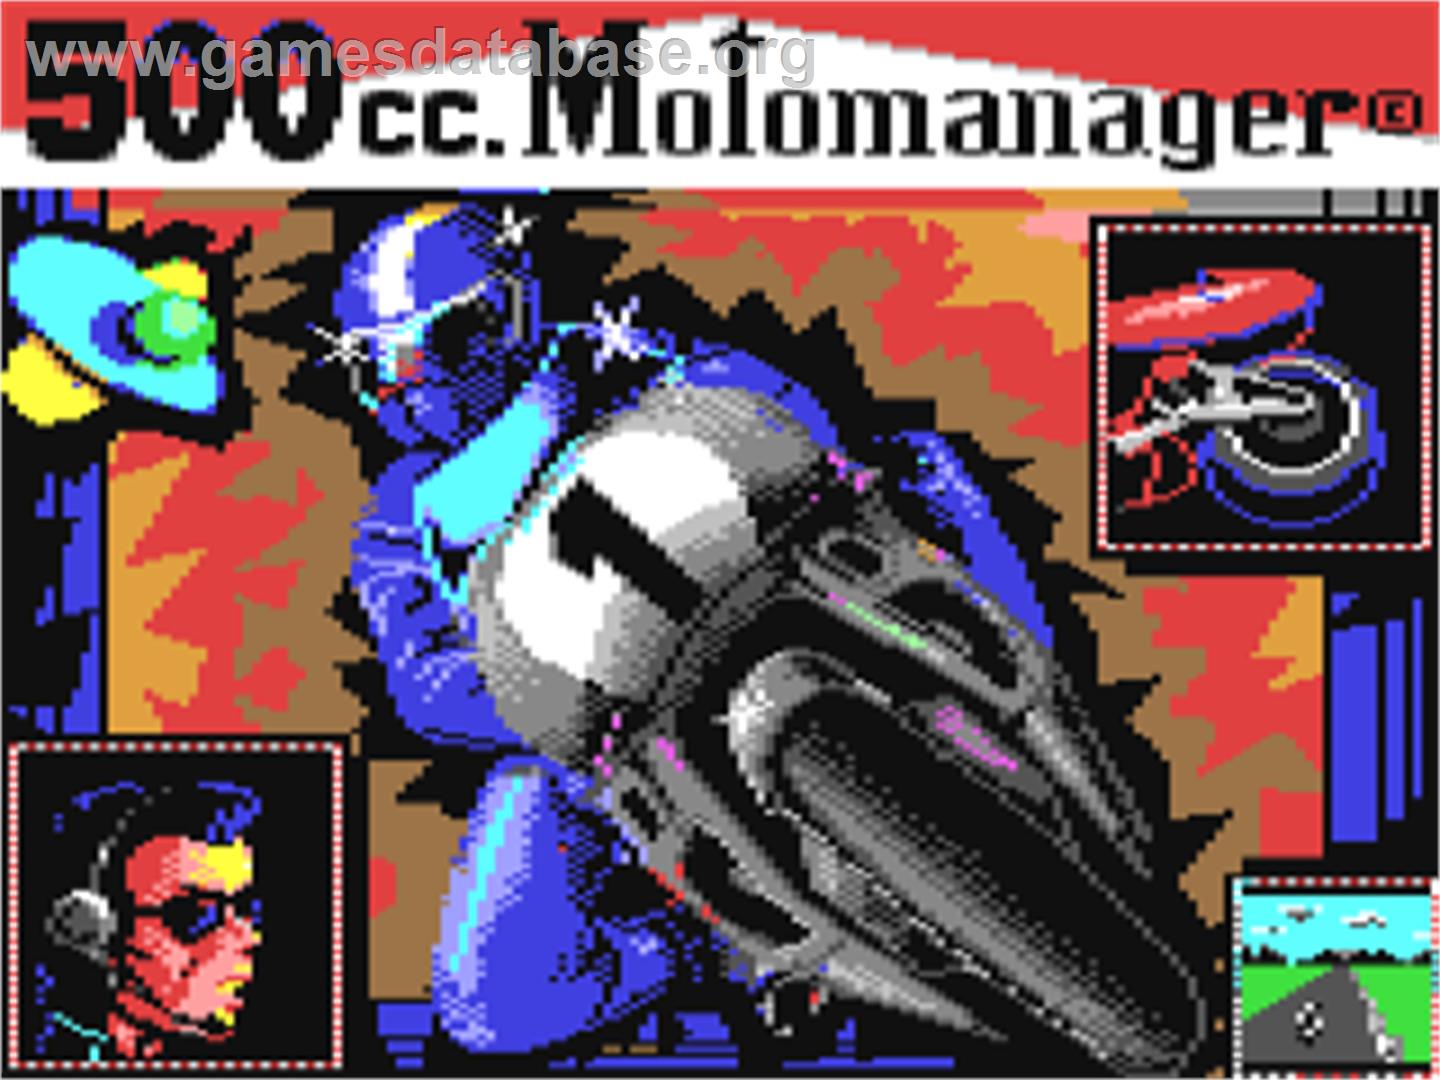 500cc Motomanager - Commodore 64 - Artwork - Title Screen